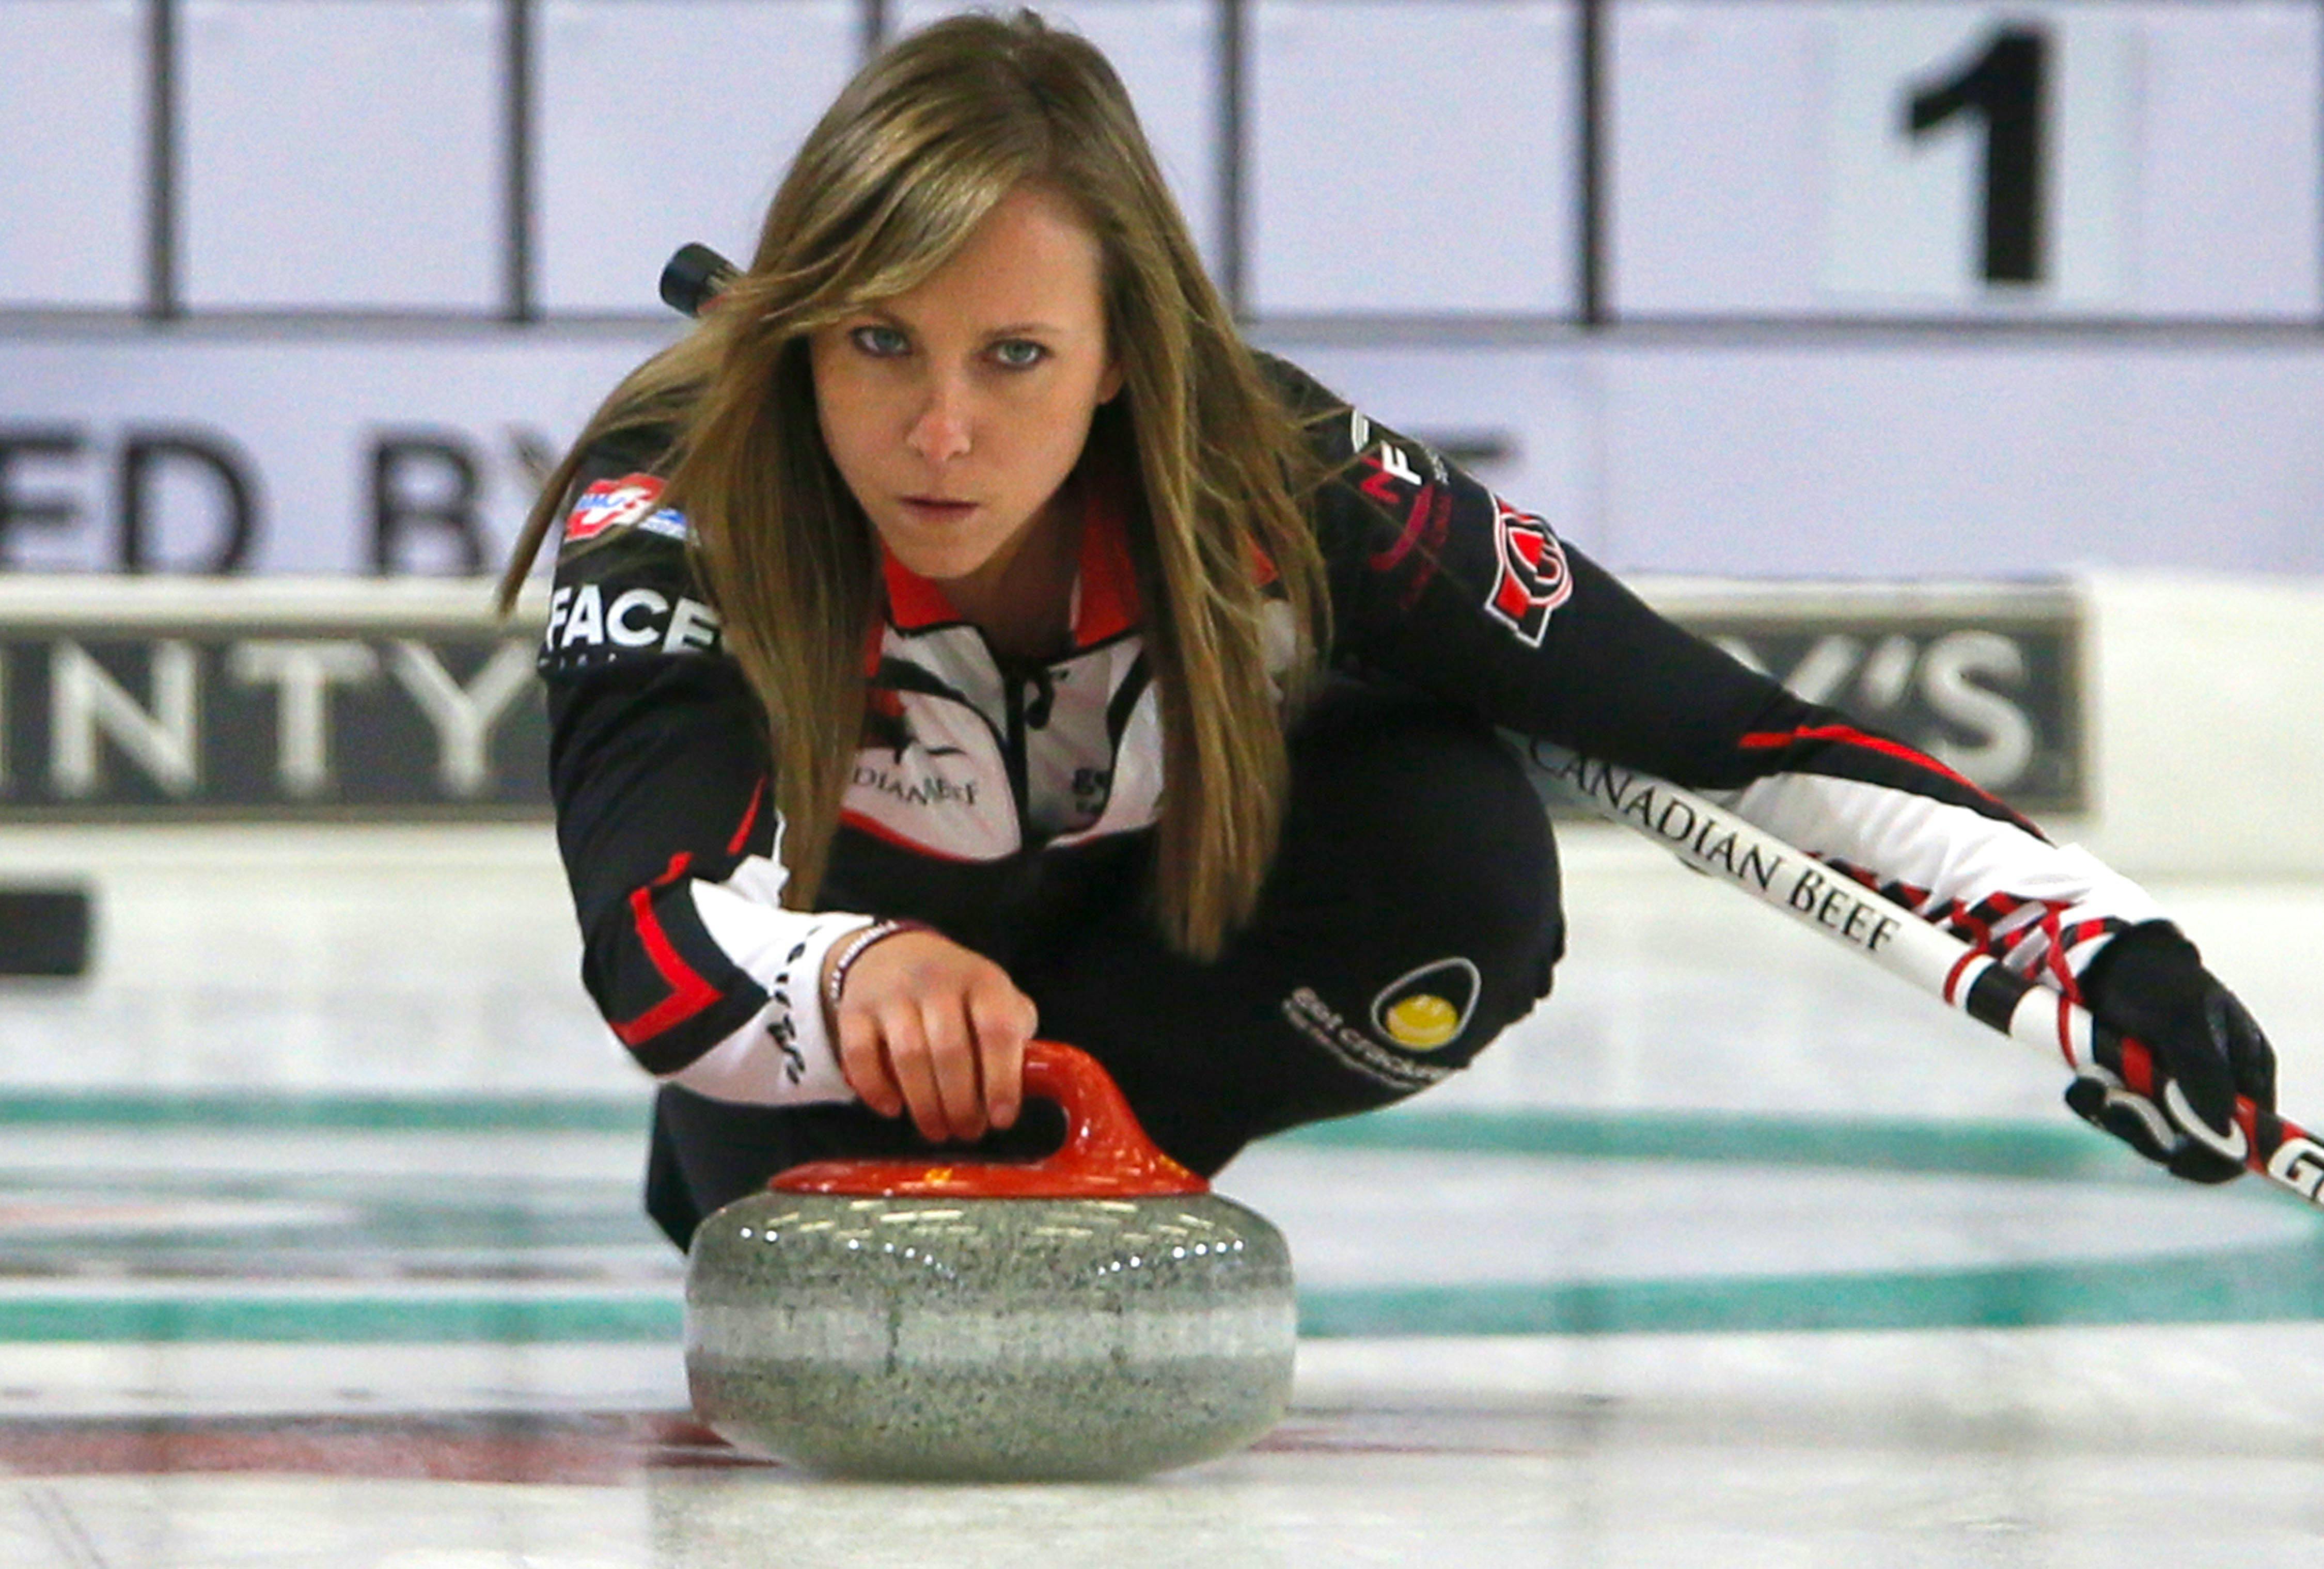 Canadian curling great Jennifer Jones announces retirement from team  curling